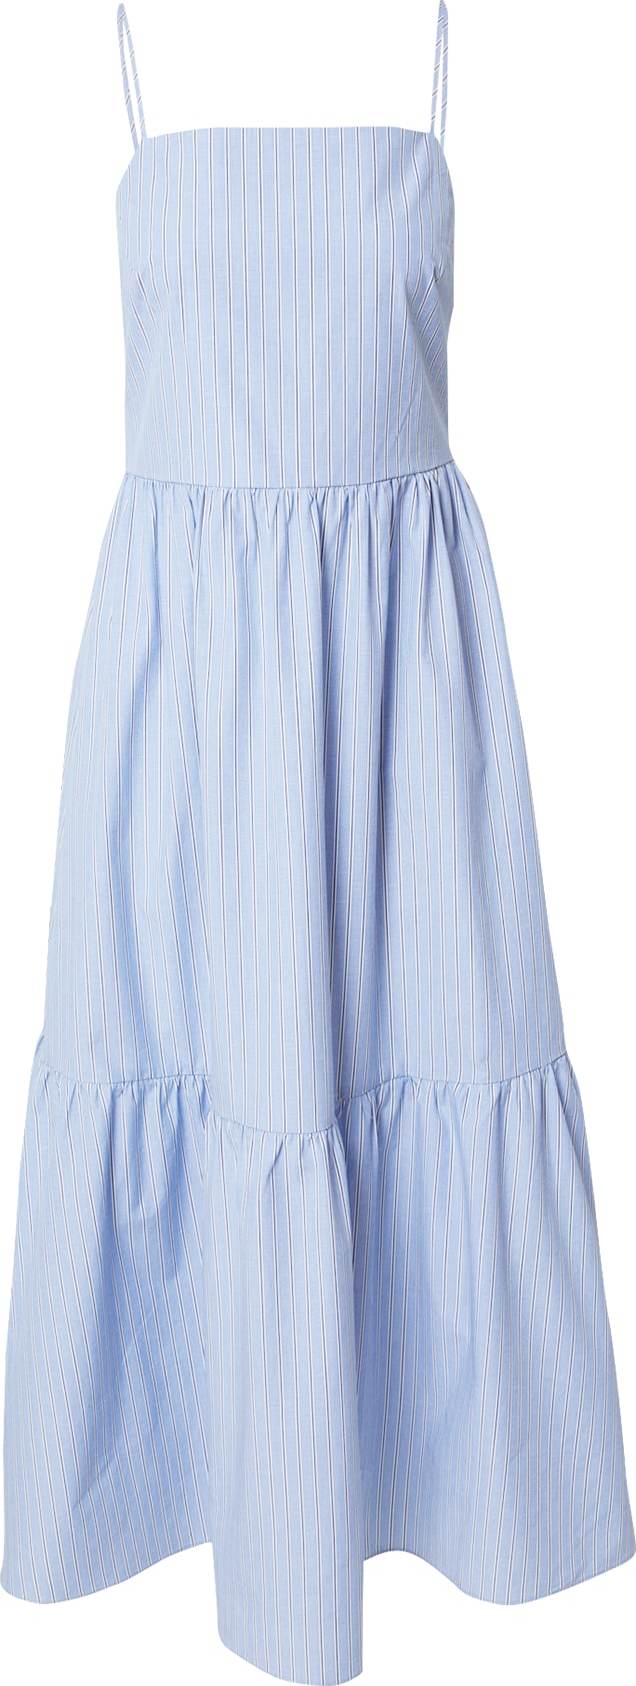 Twist & Tango Letní šaty 'KIONA' světlemodrá / marine modrá / bílá